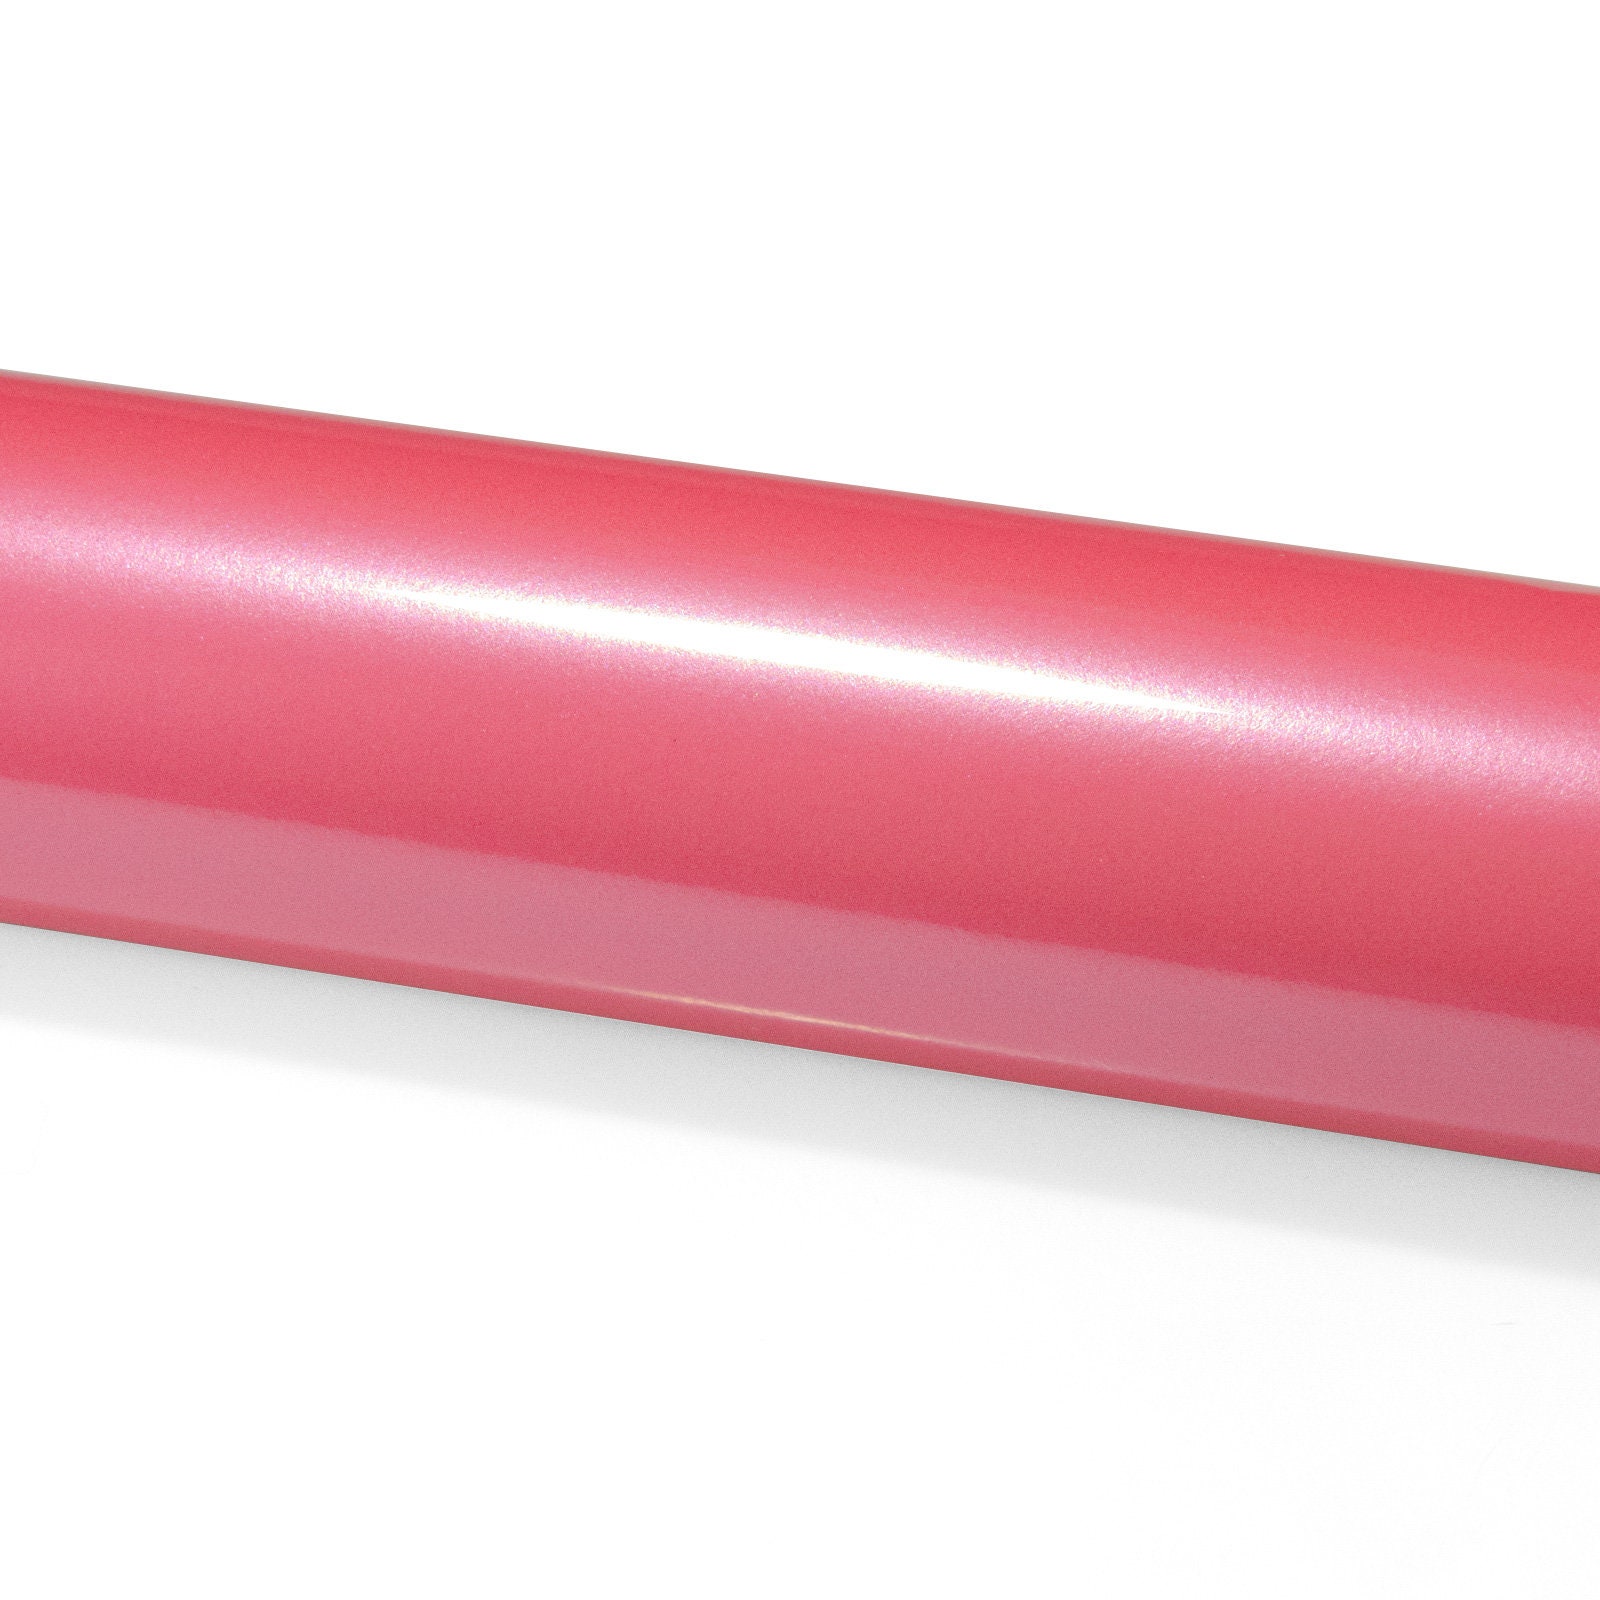 Super Gloss Metallic Petal Pink Vinyl Wrap Sticker Decal Bubble Free Air  Release Car Vehicle DIY Film 